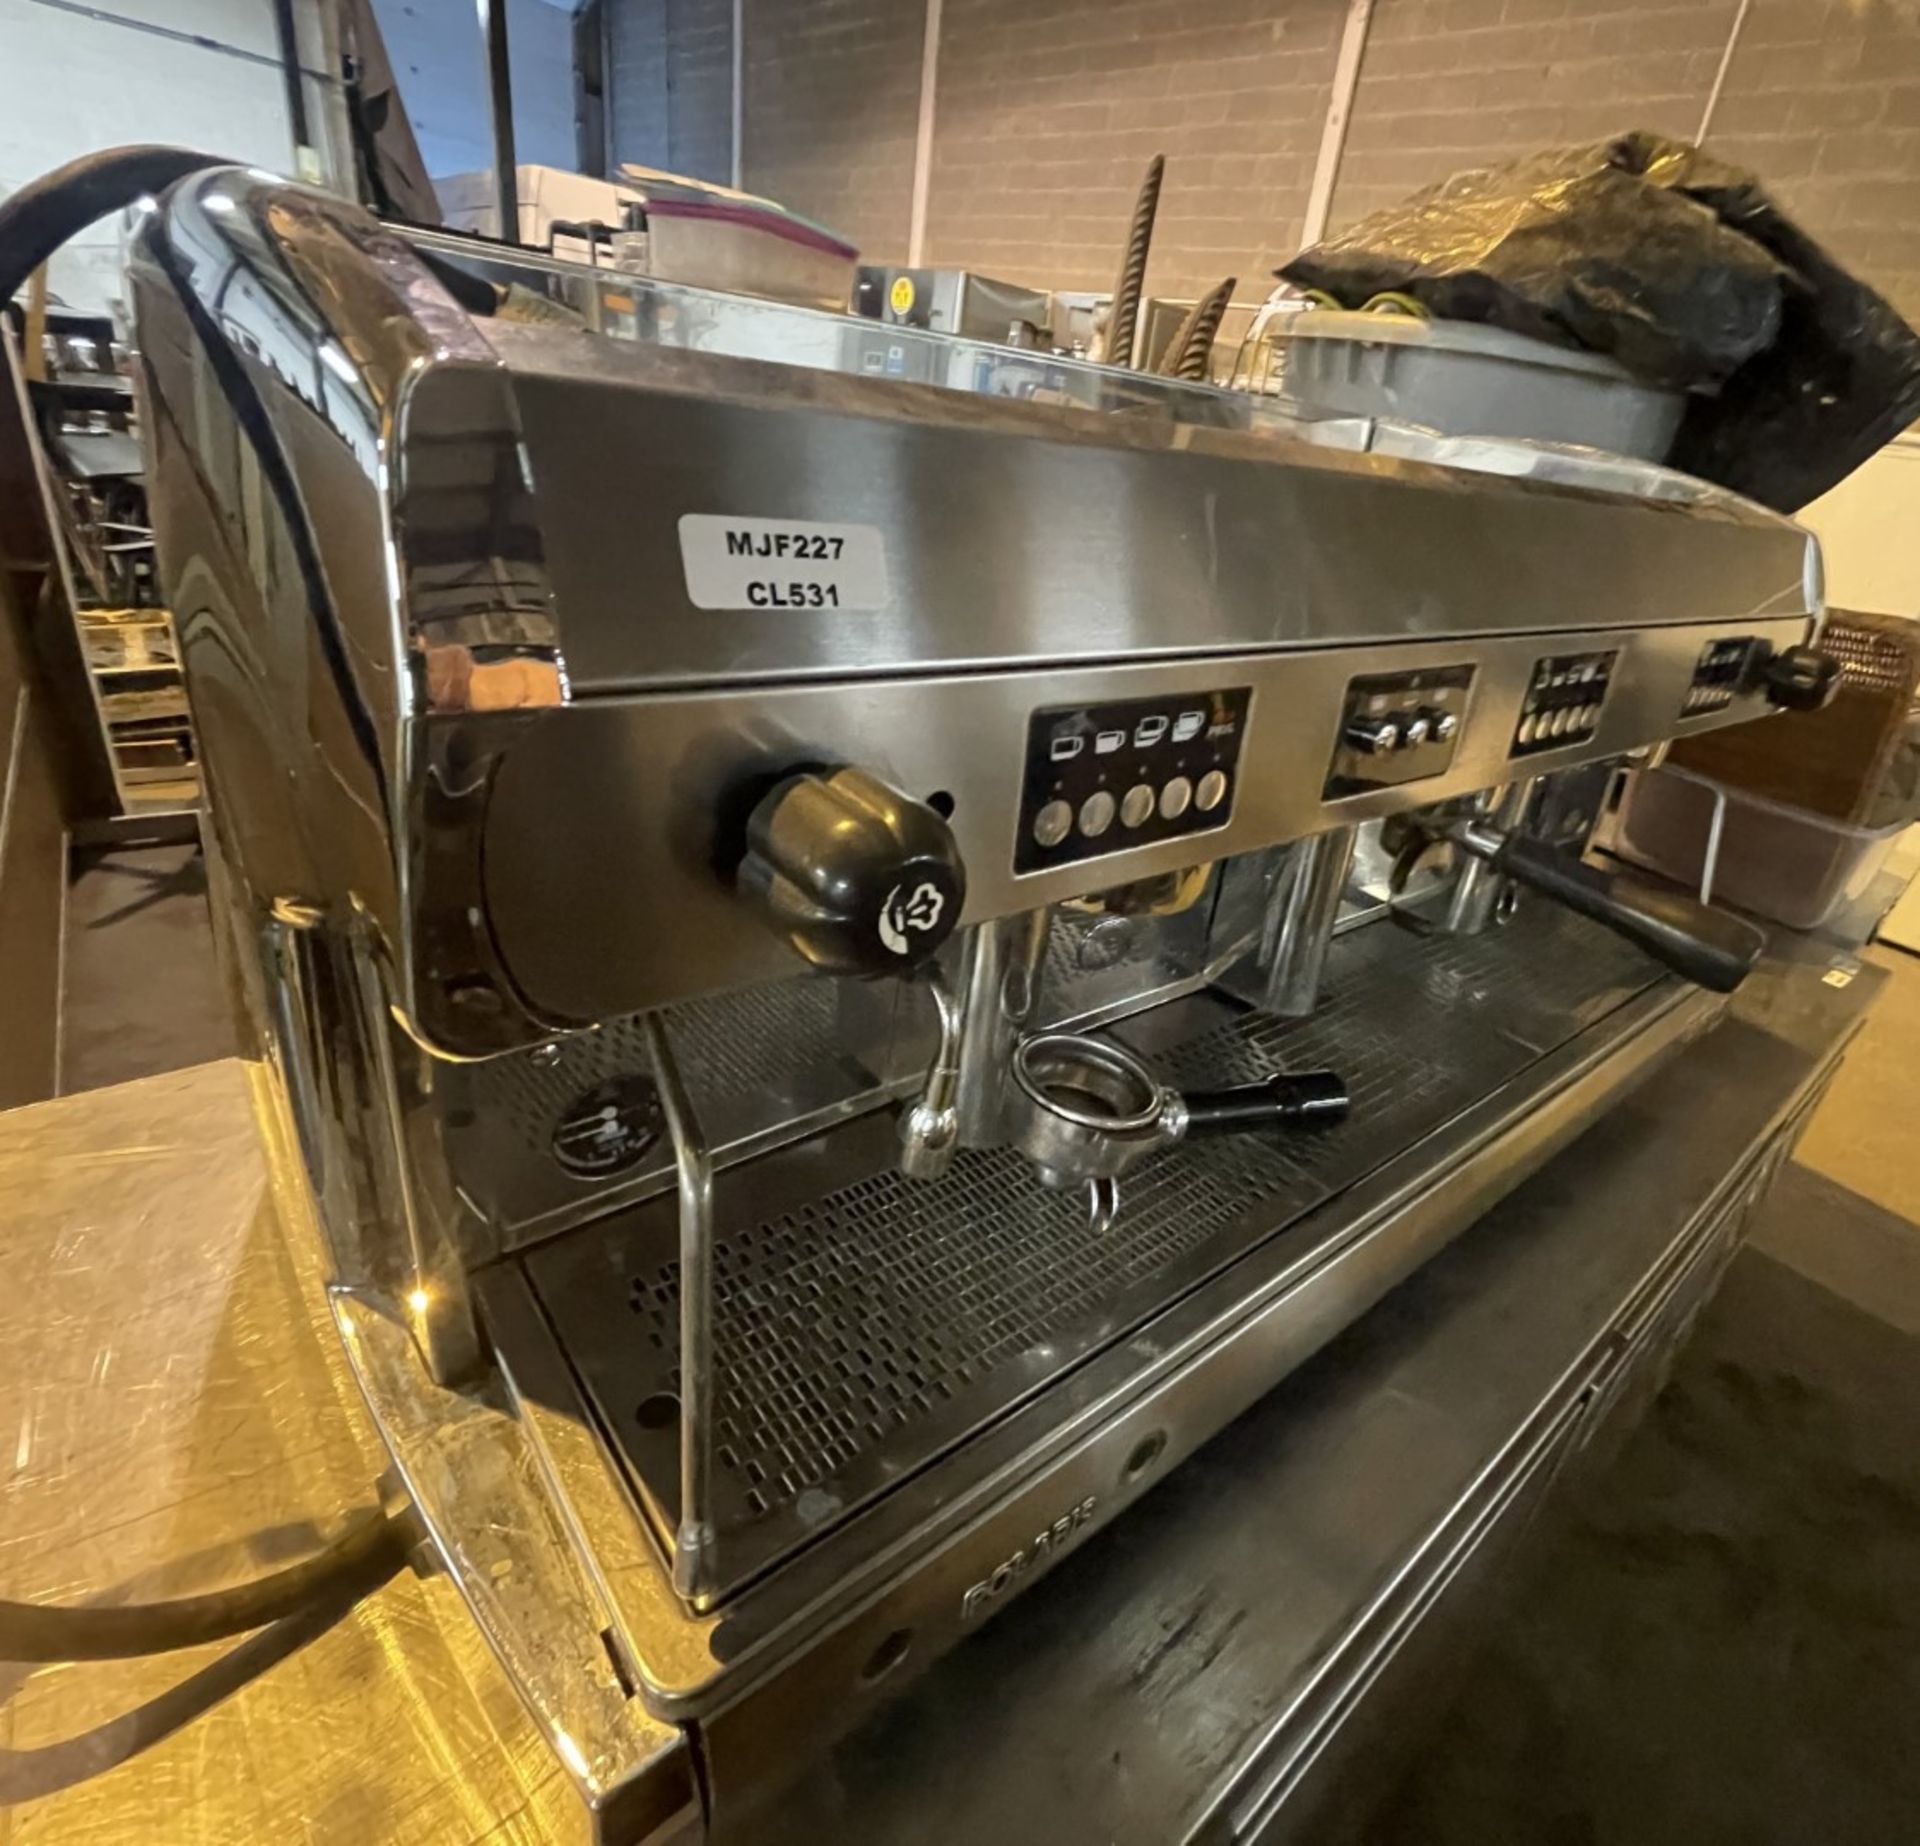 1 x Polaris Wega 3 Group Commercial Espresso Coffee Machine - Stainless Steel Exterior - 3 Phase - Image 11 of 14